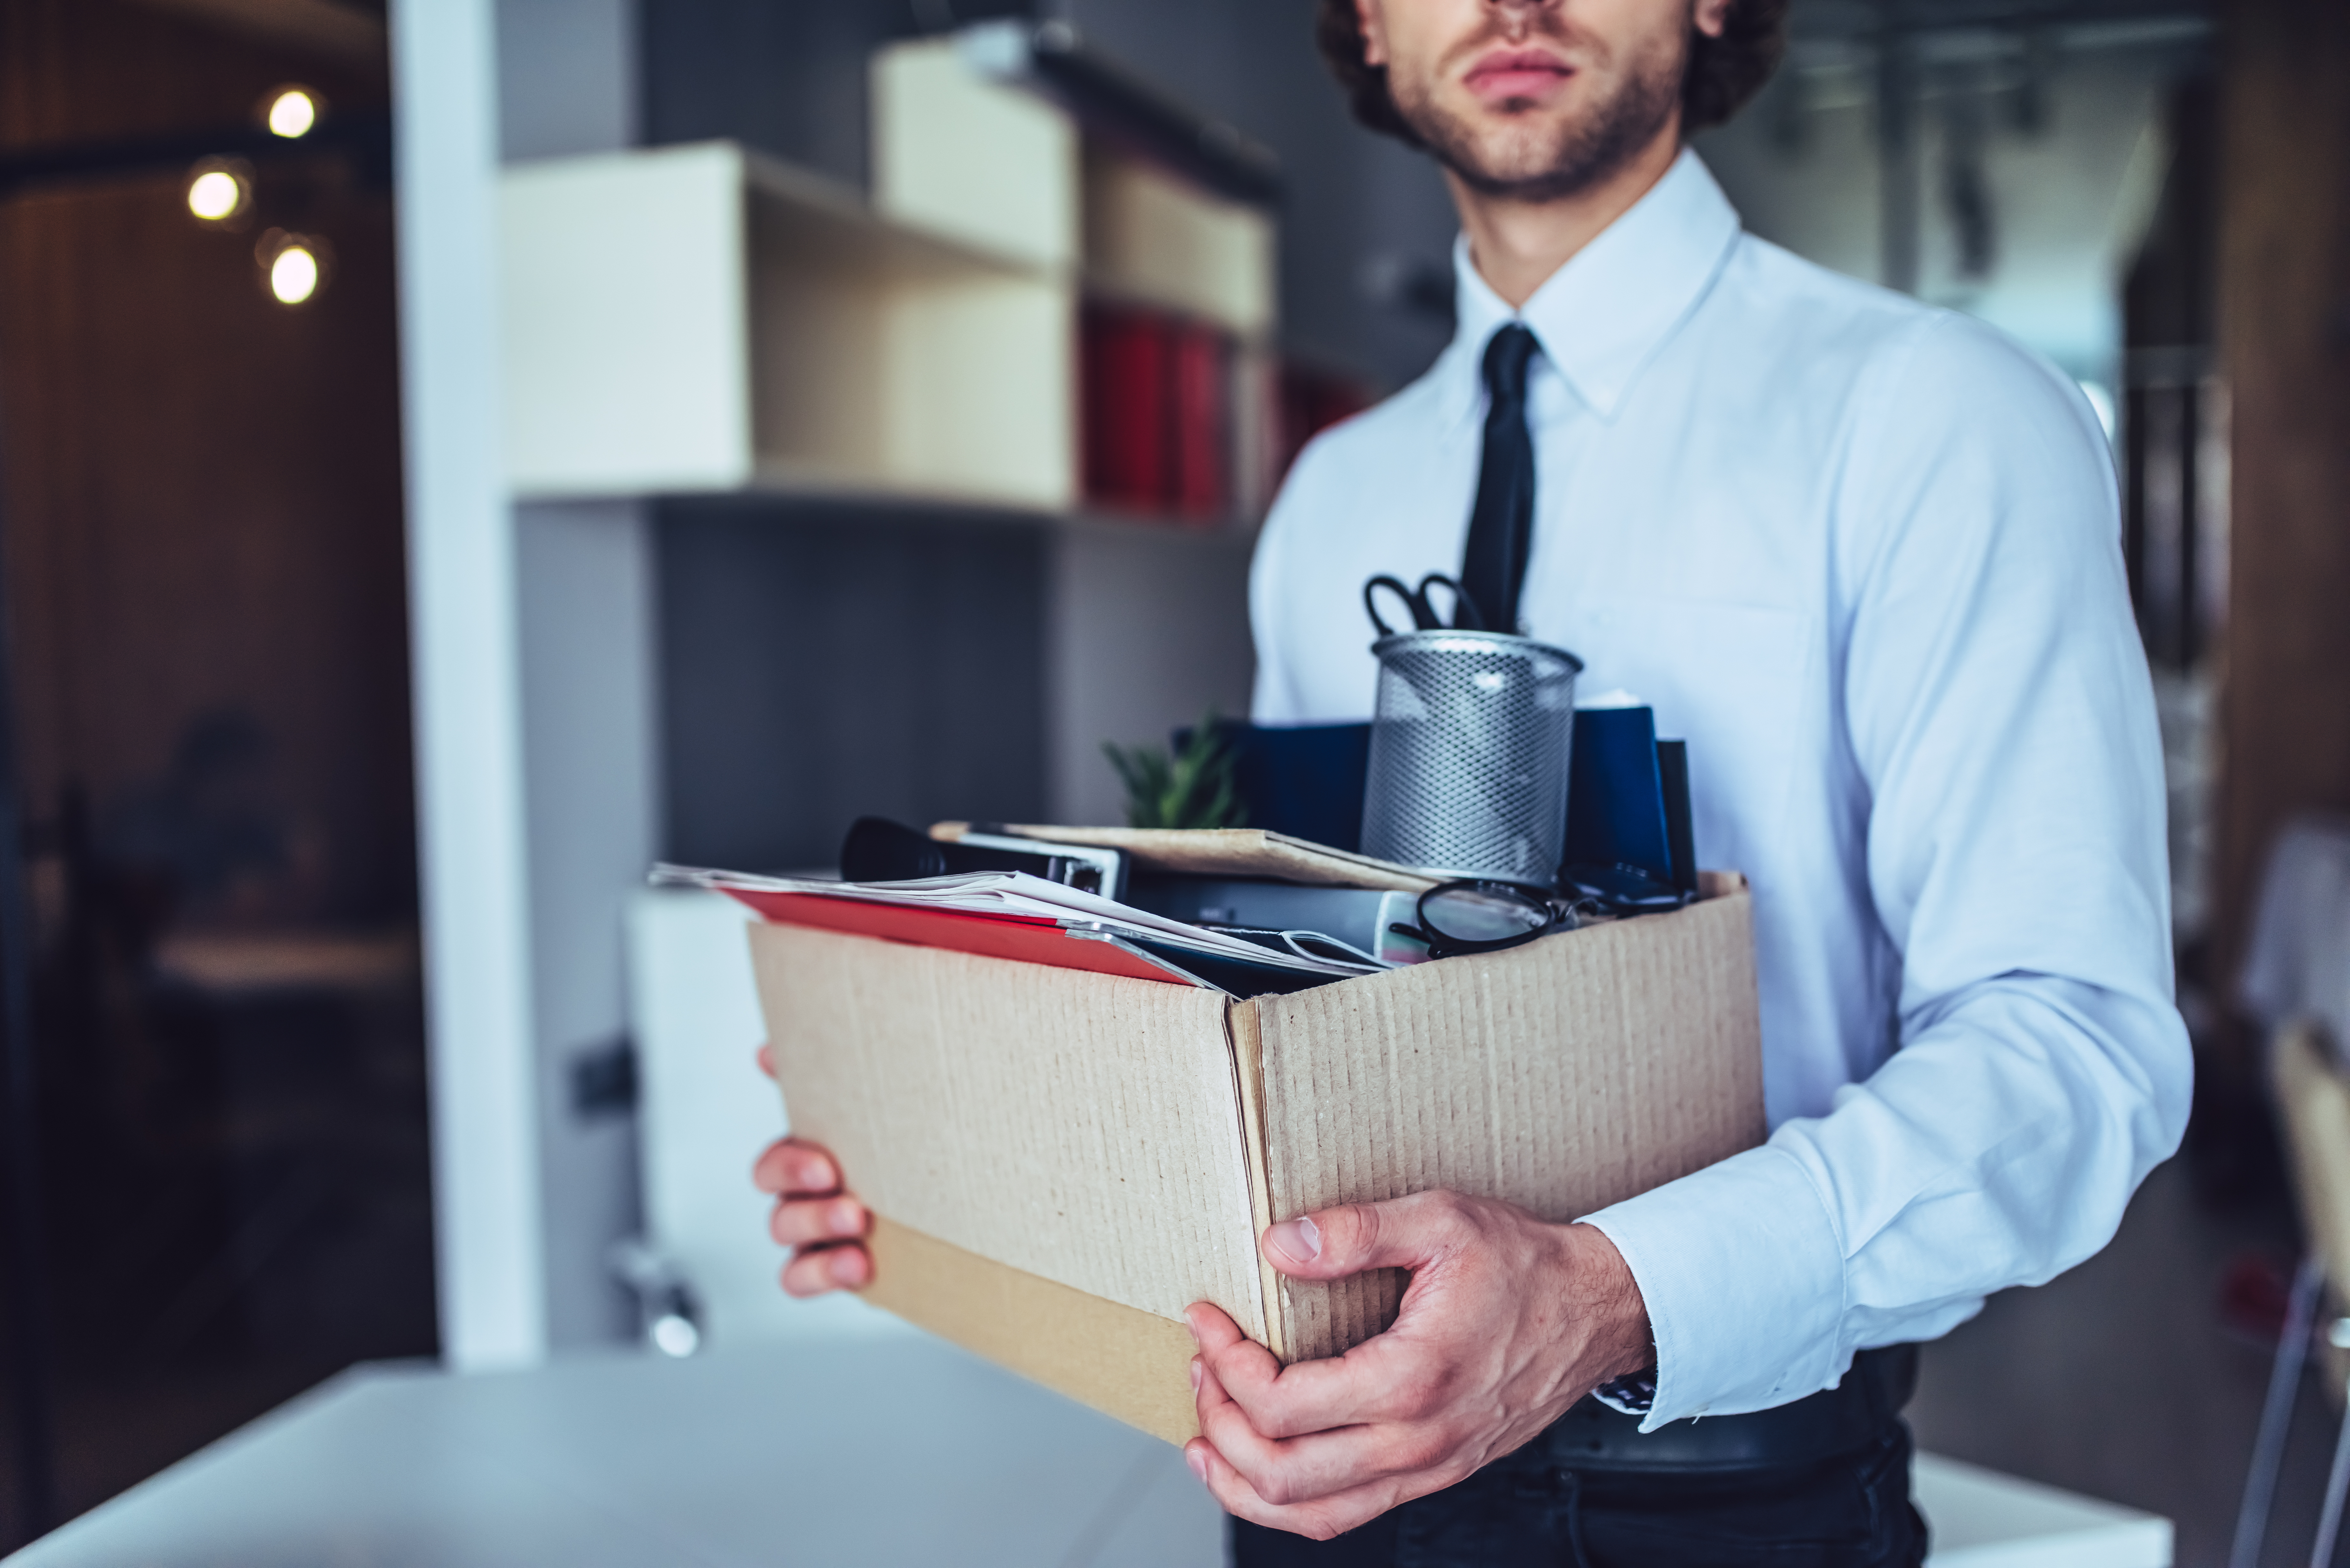 A man holding a carton full of his belongings inside an office | Source: Shutterstock